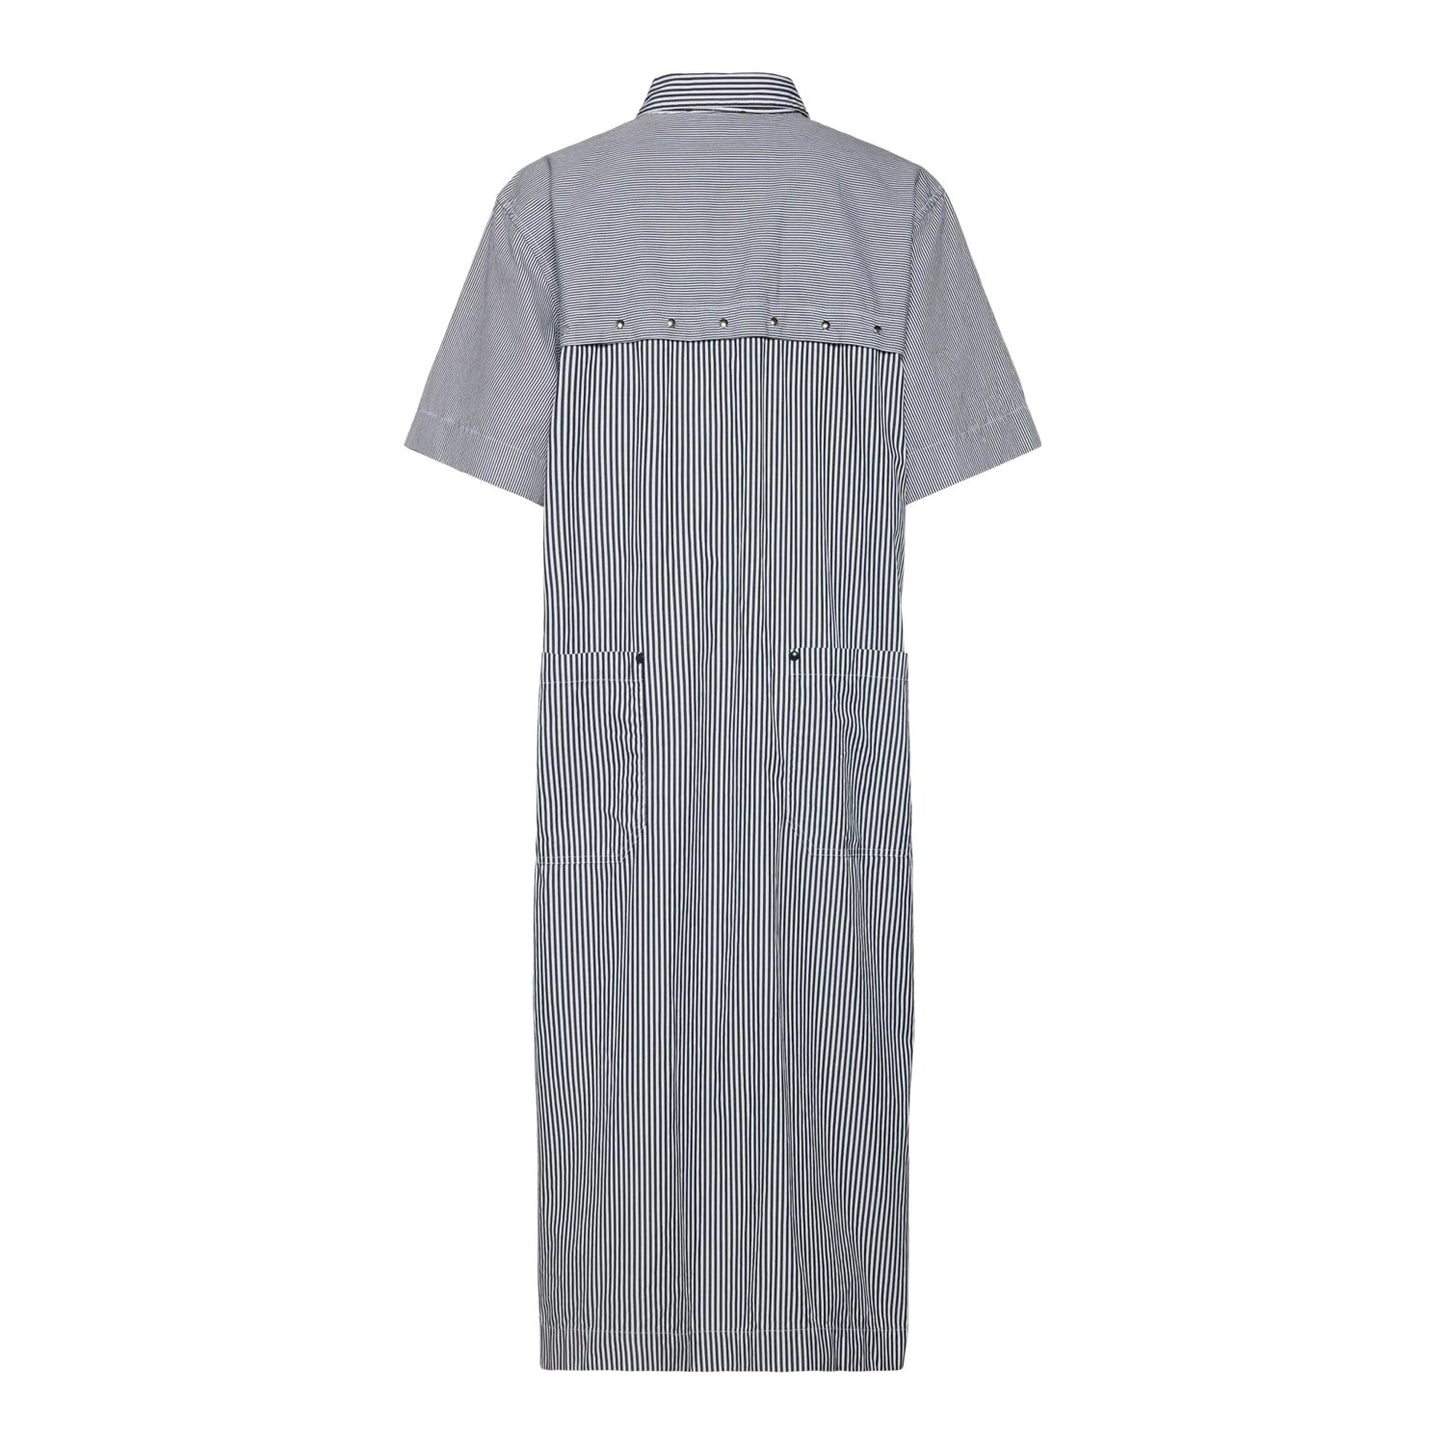 D-Lizeth-A Striped Dress